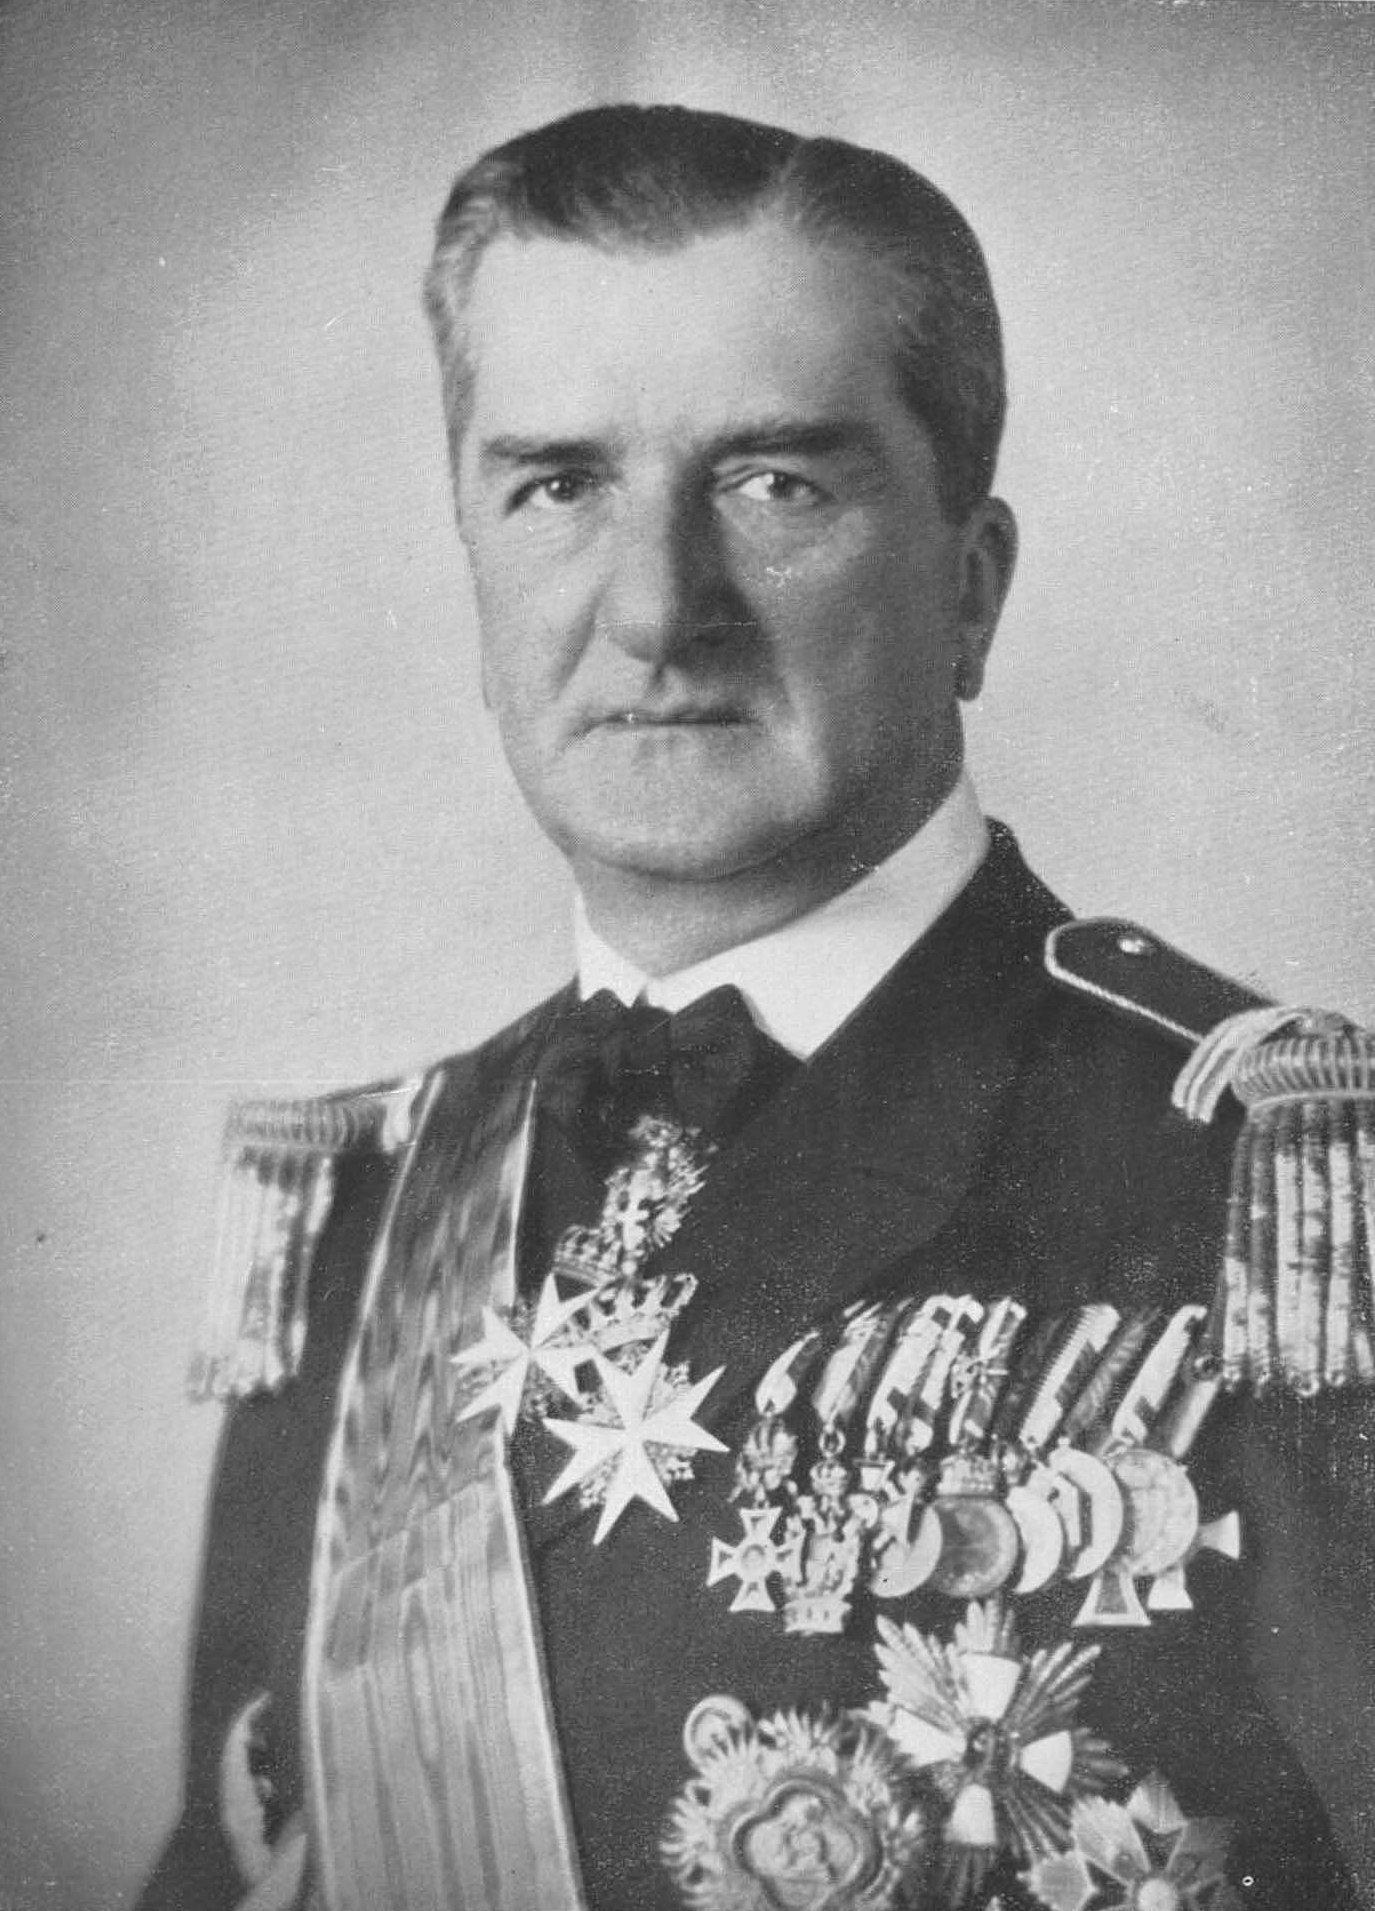 Horthy Miklós / Nikolas Horthy (Hungarian WWII Admiral)